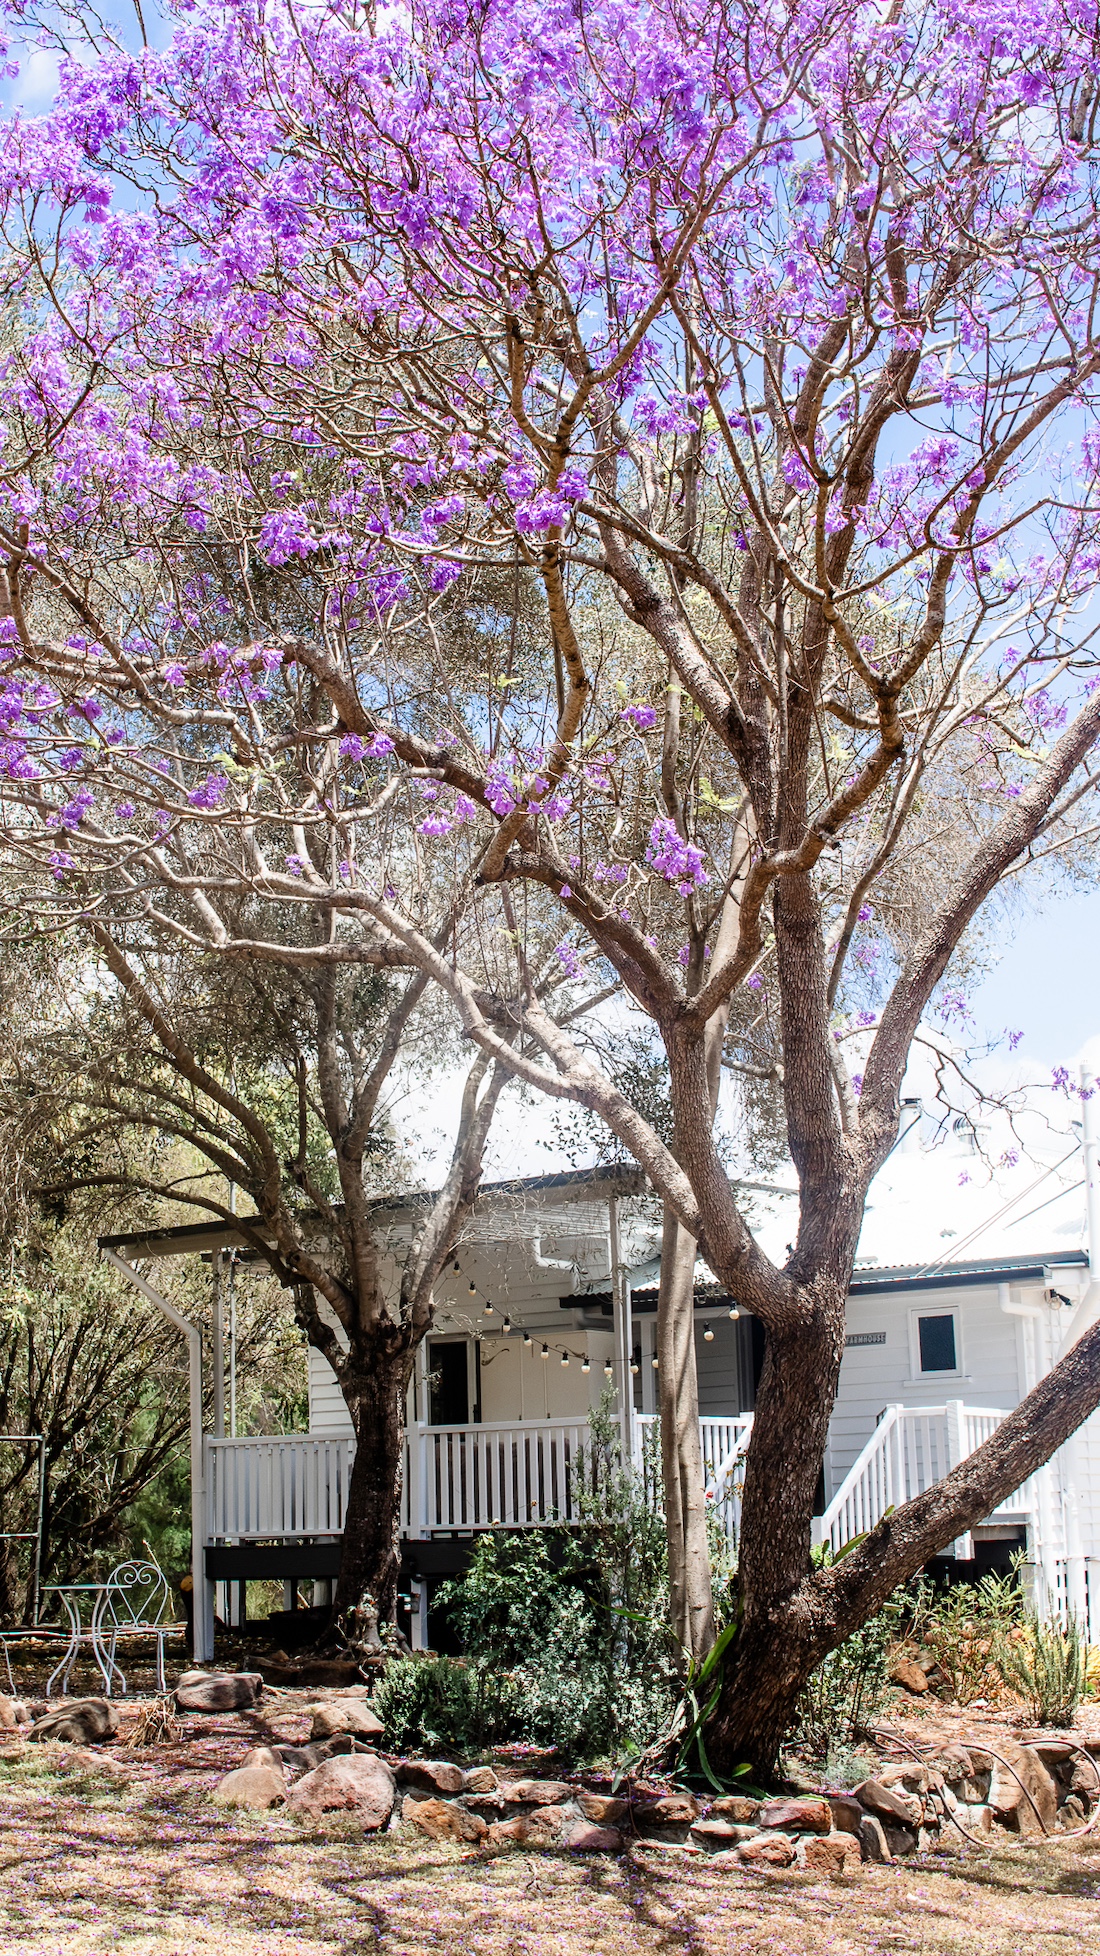 Summerholm House with purple jacaranda tree